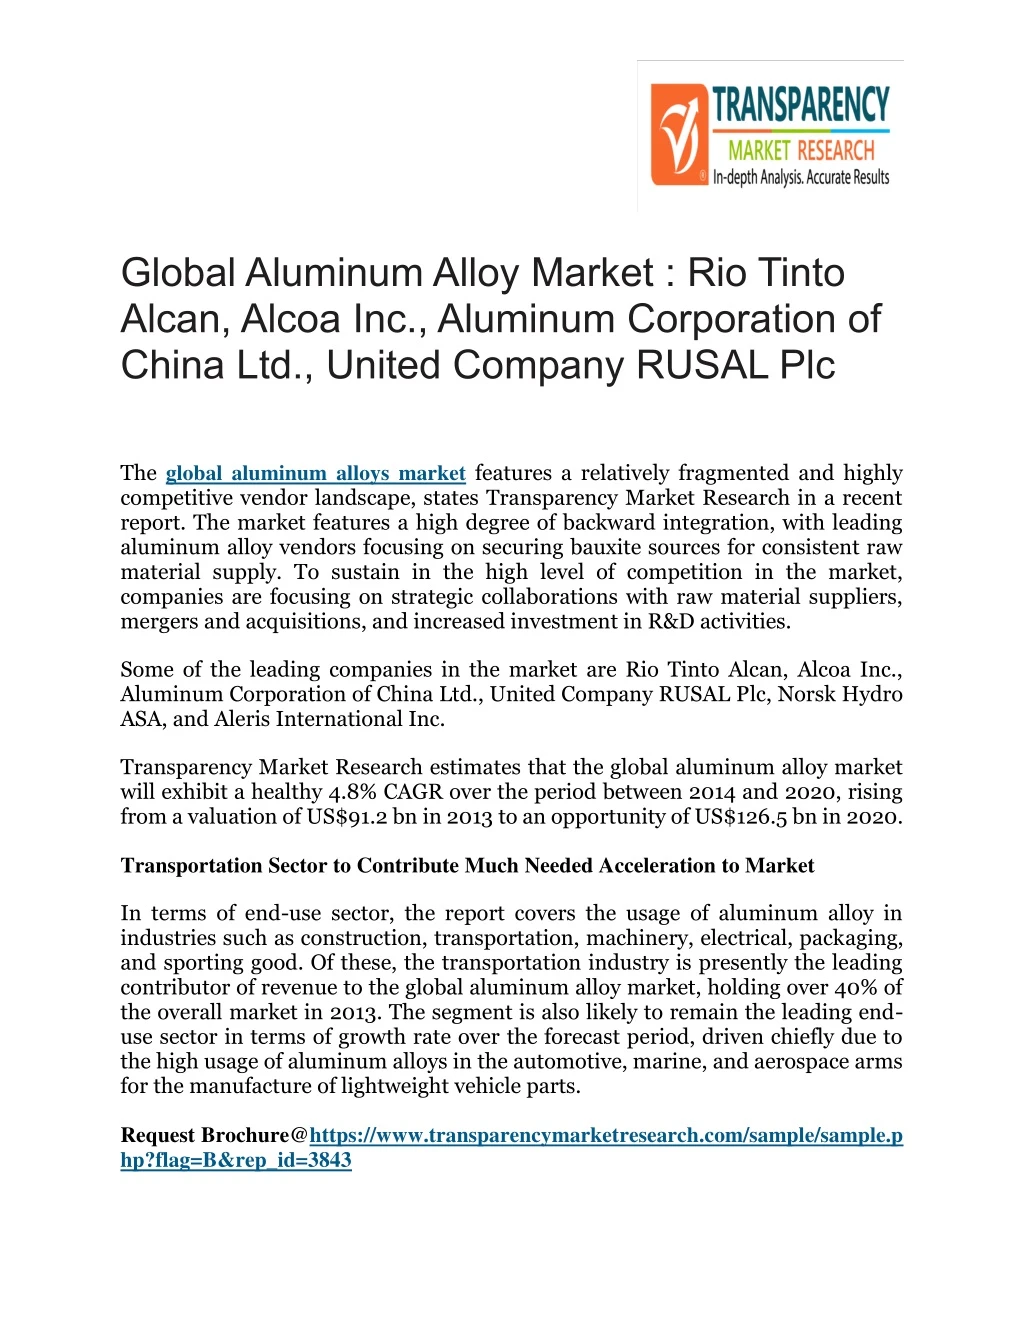 global aluminum alloy market rio tinto alcan